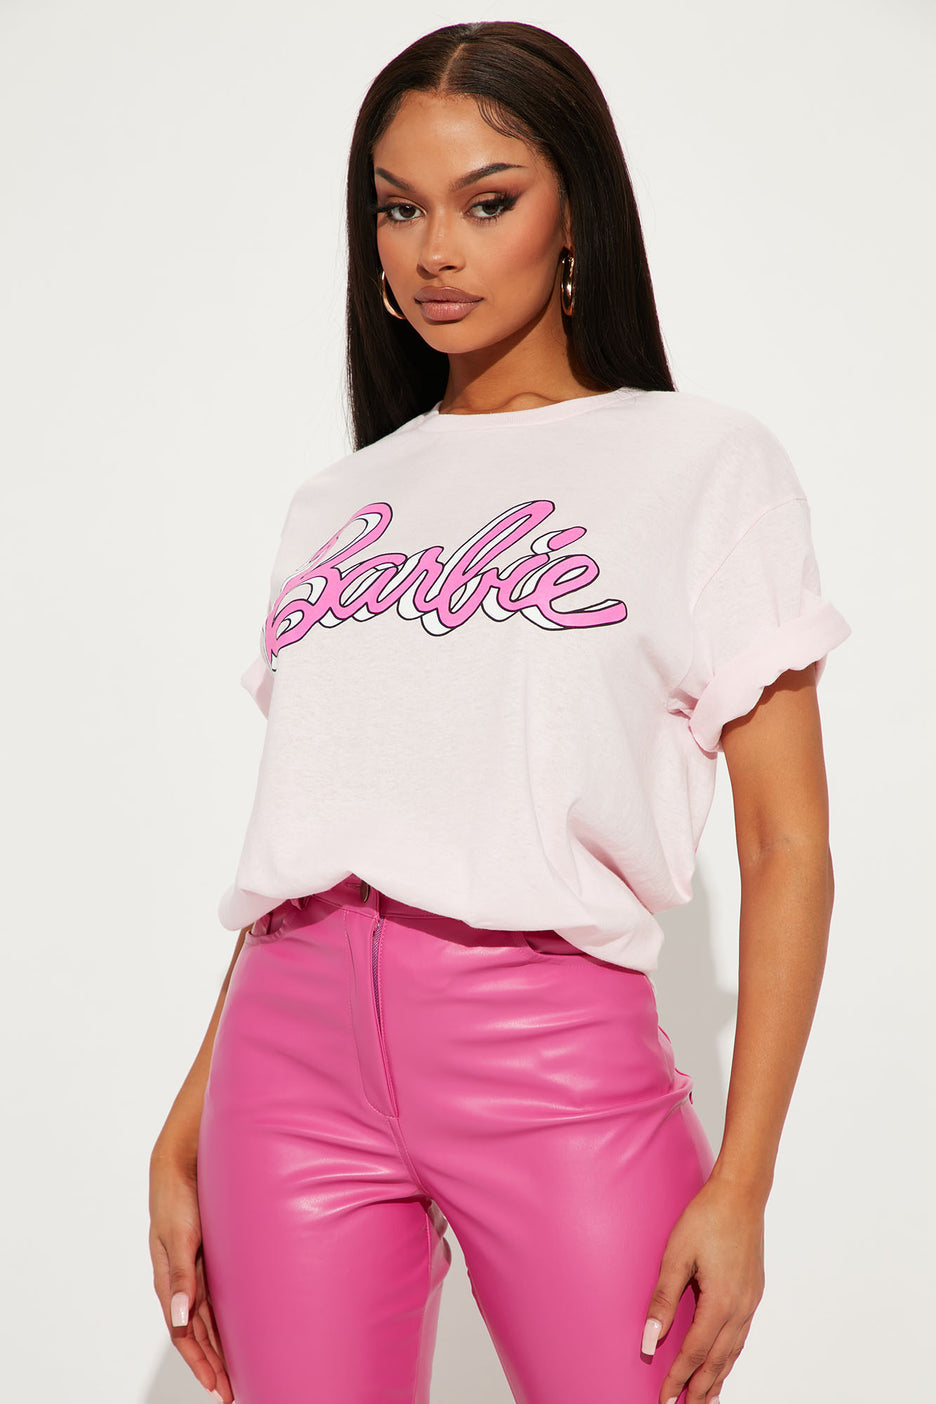 Barbie graphic shirt